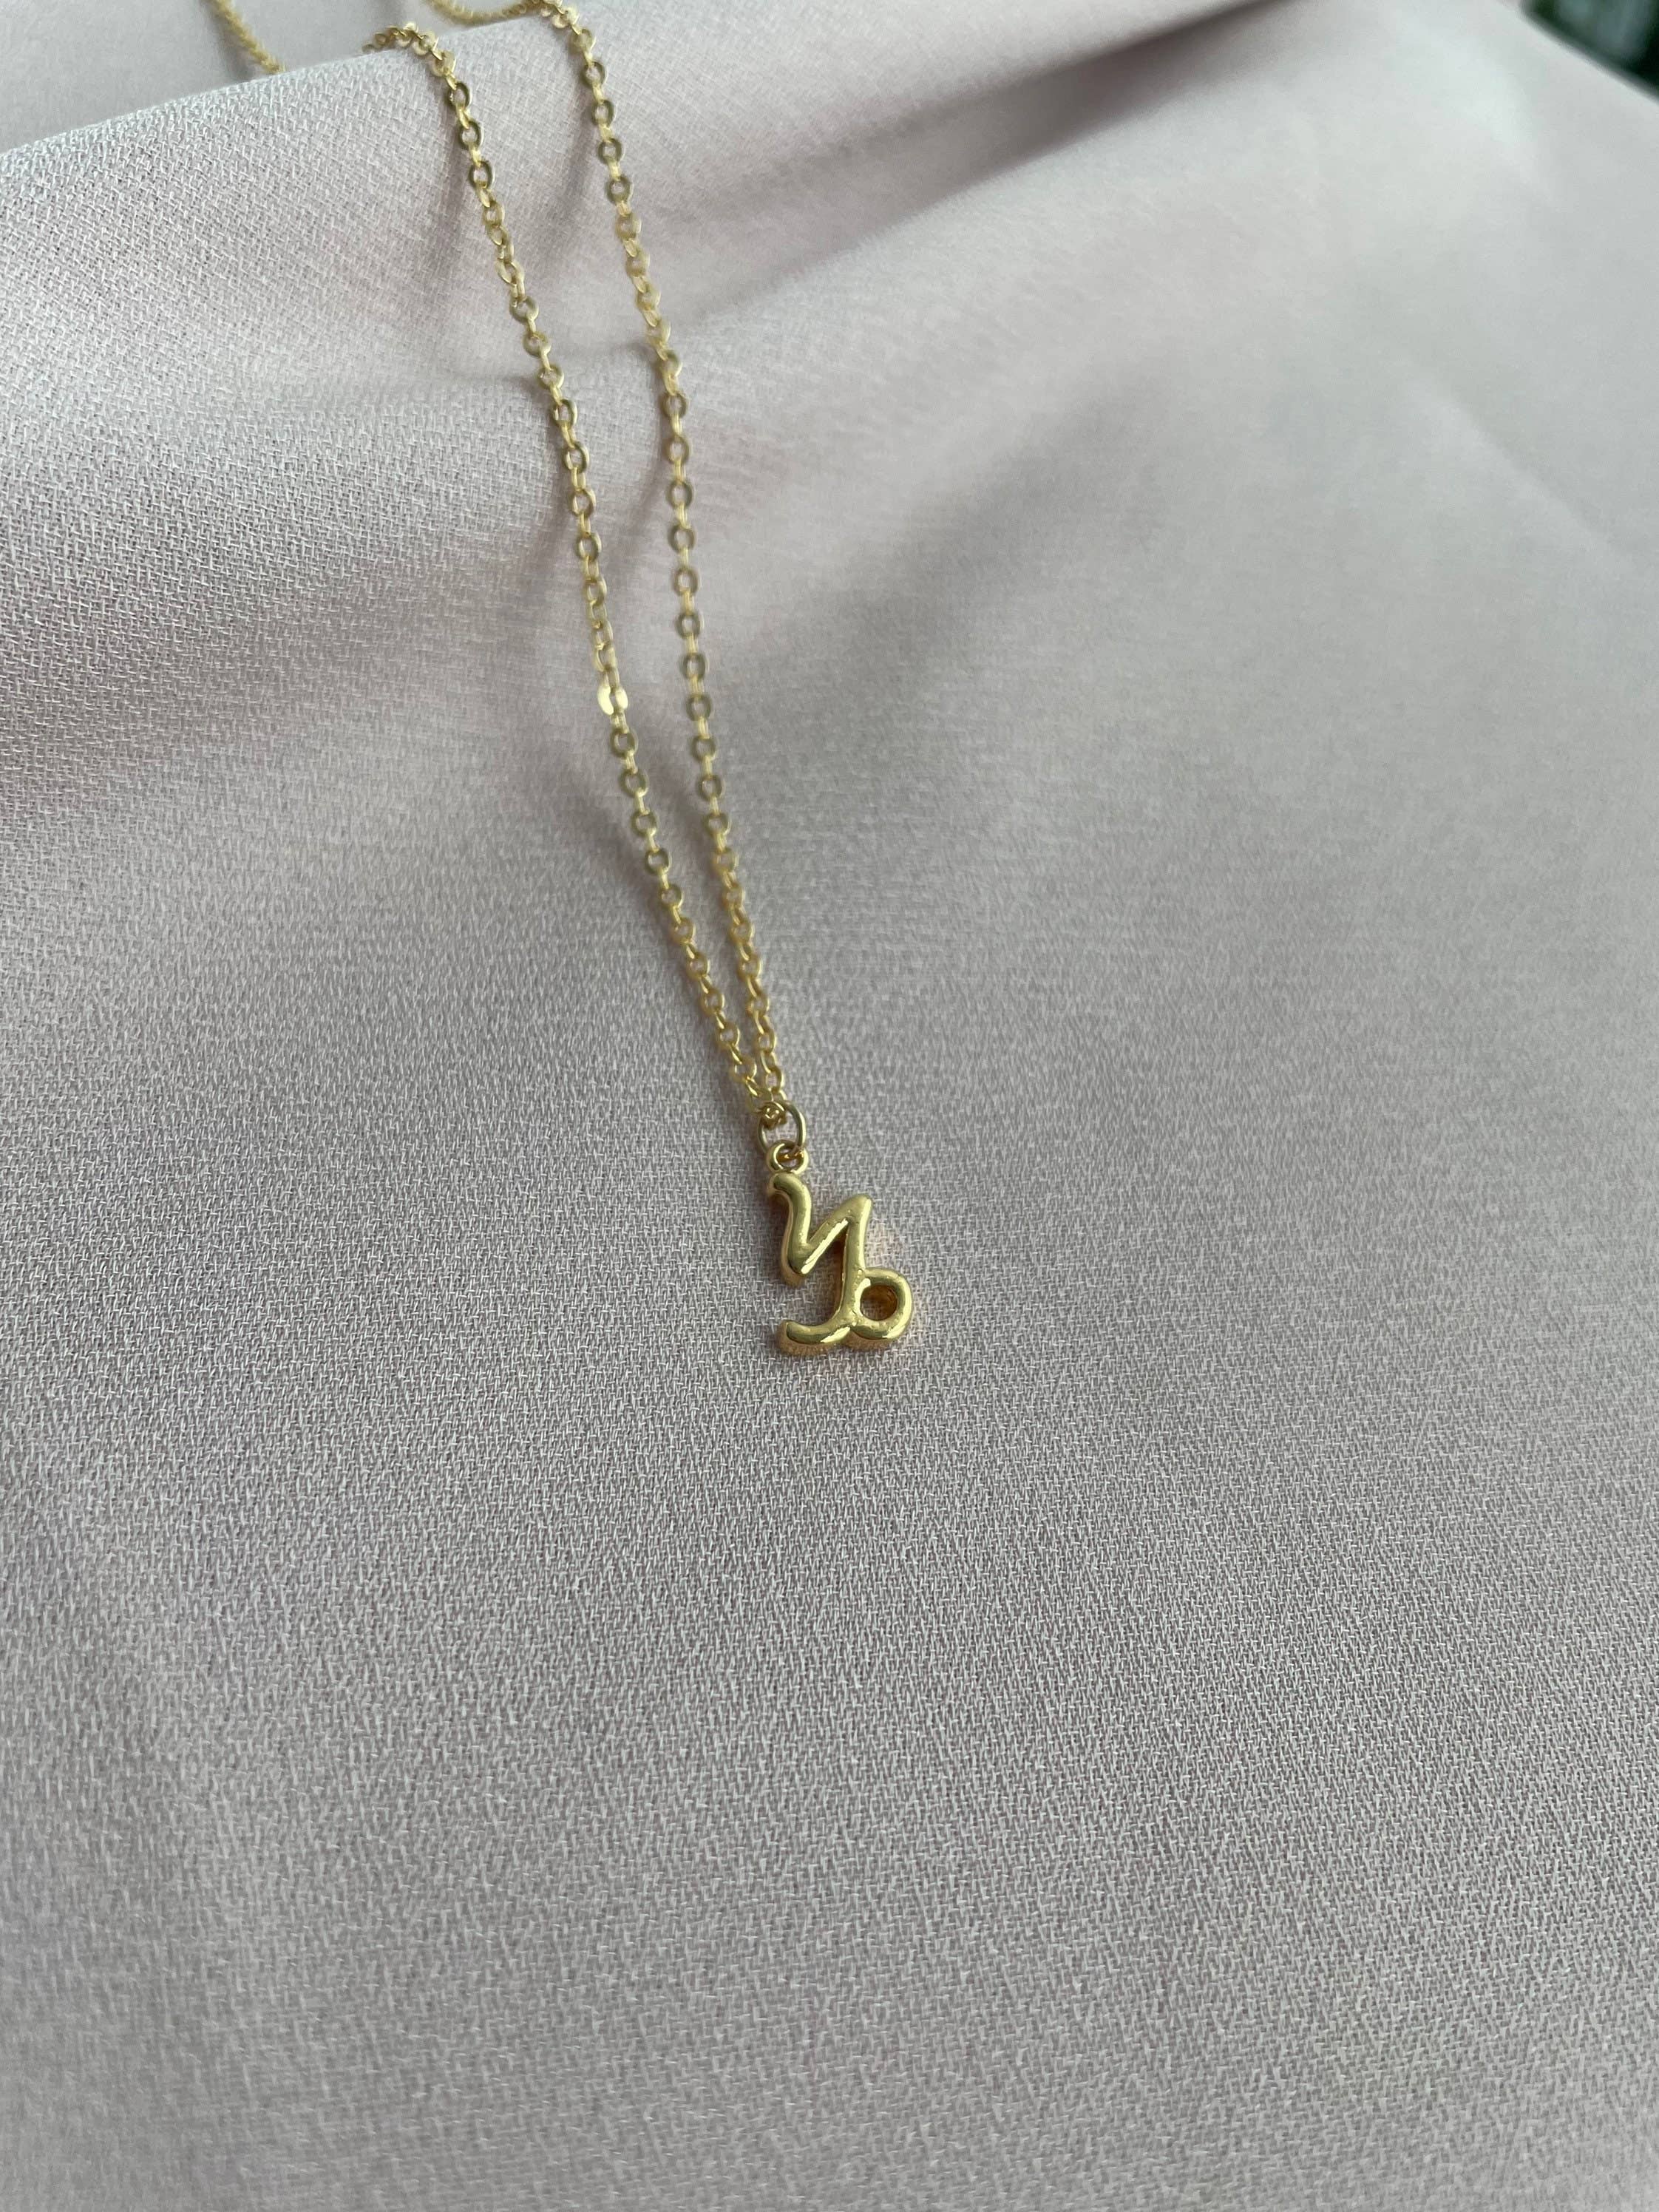 Gold Diamond & 18kt gold necklace | Lizzie Mandler | MATCHES UK